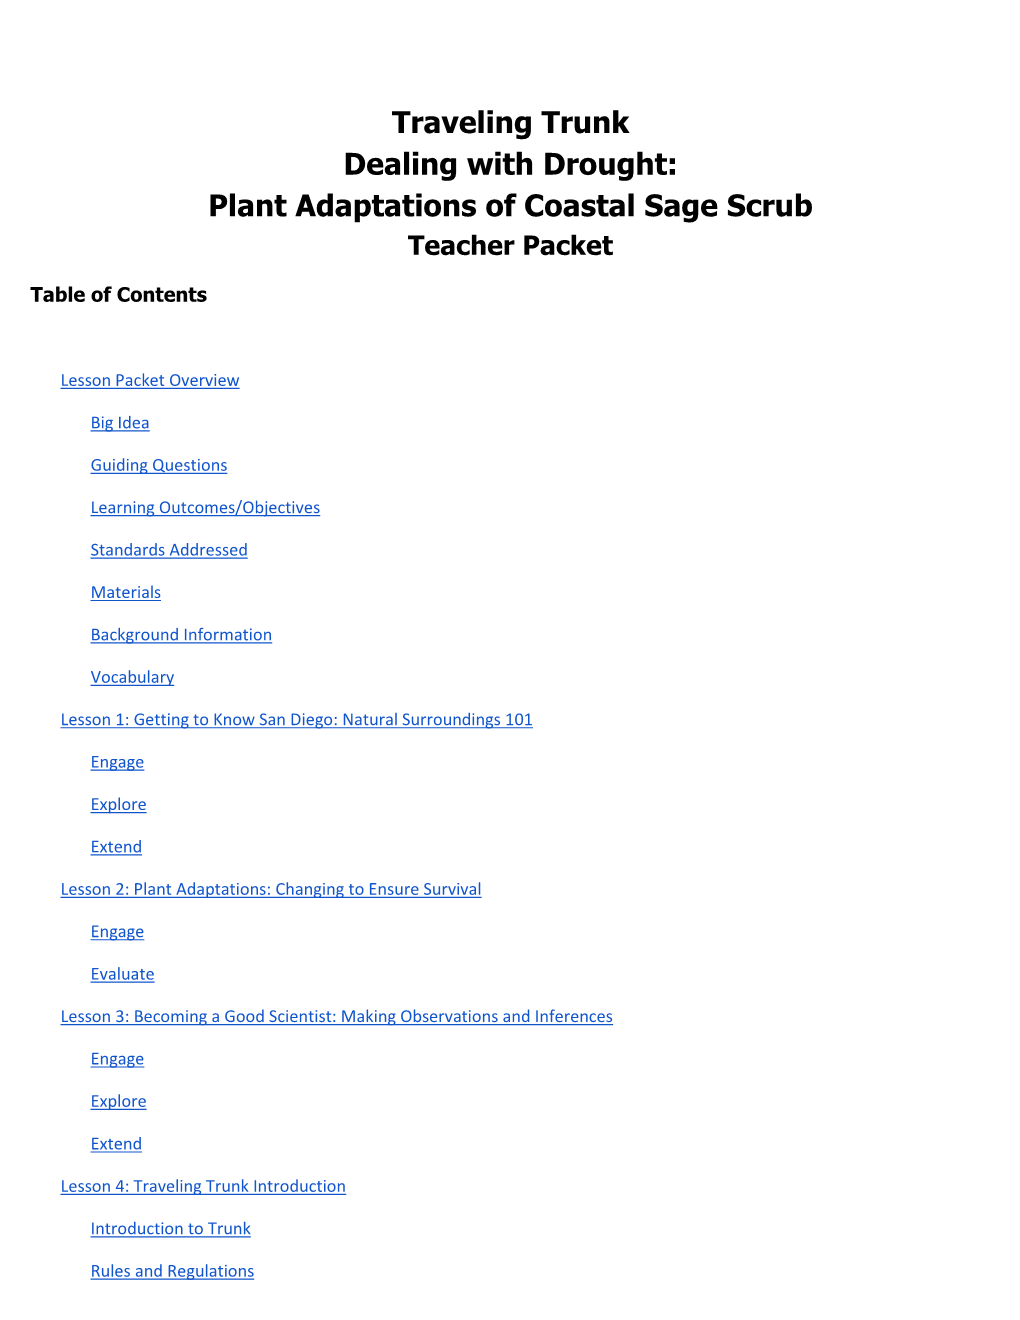 Plant Adaptations of Coastal Sage Scrub Teacher Packet